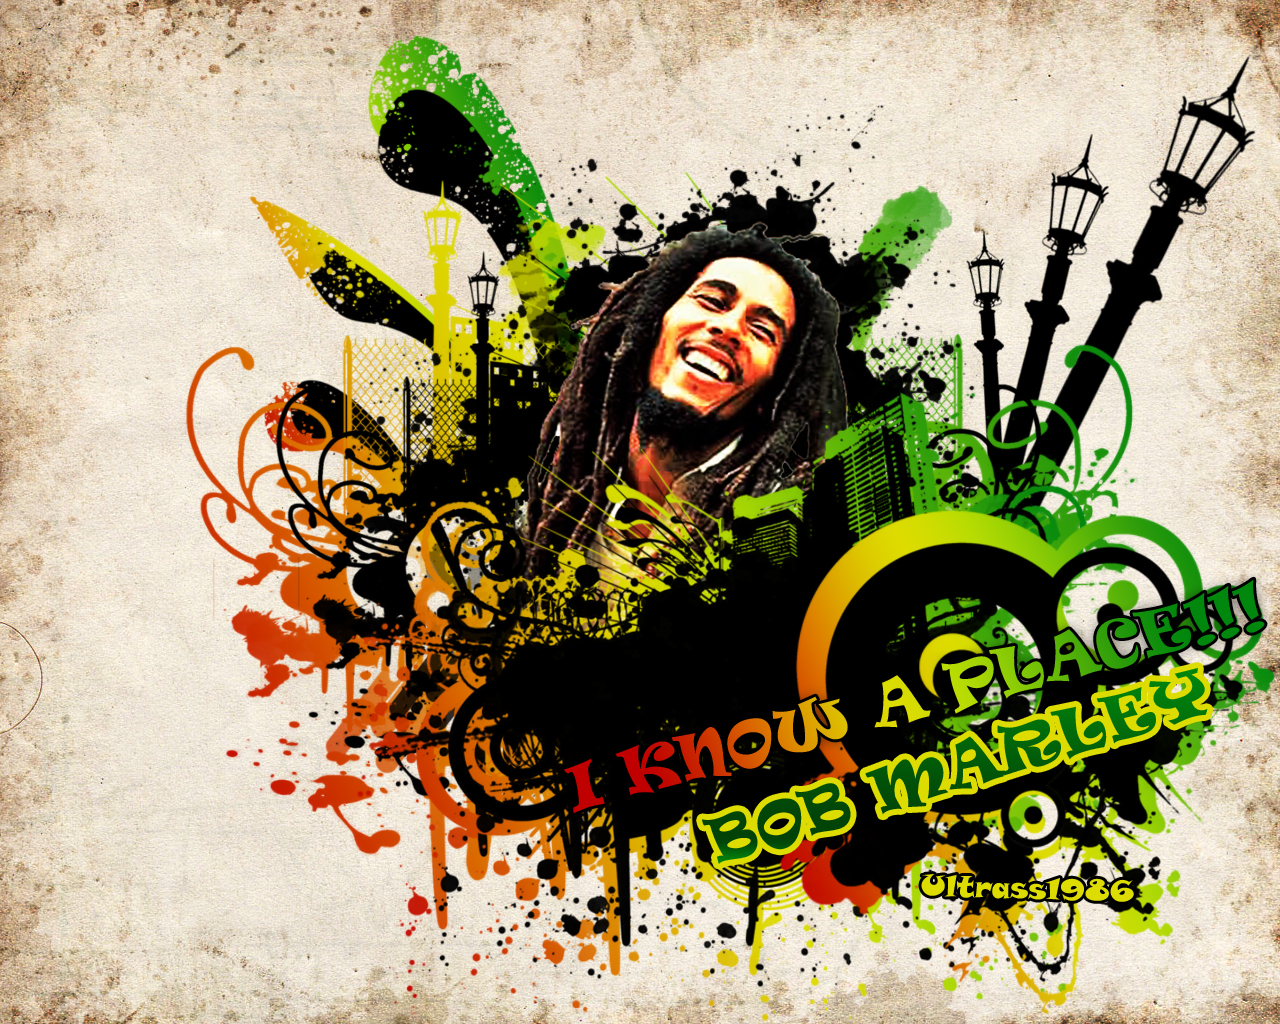 Bob Marley Wallpaper